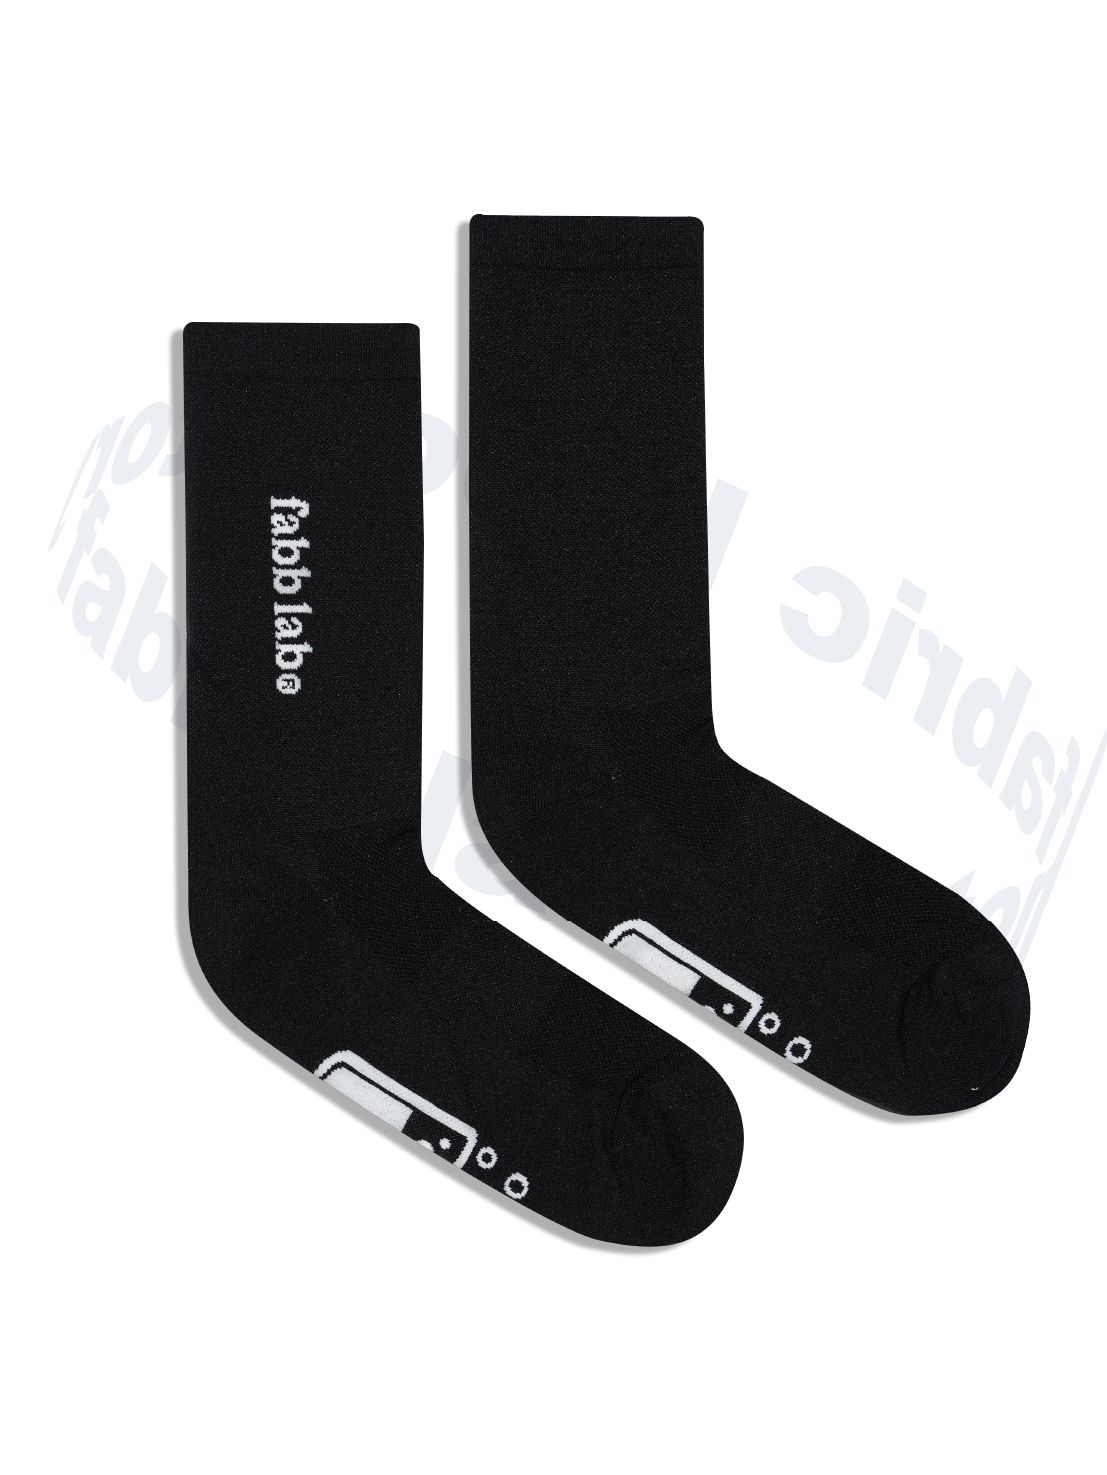 FabbLab Socks Black